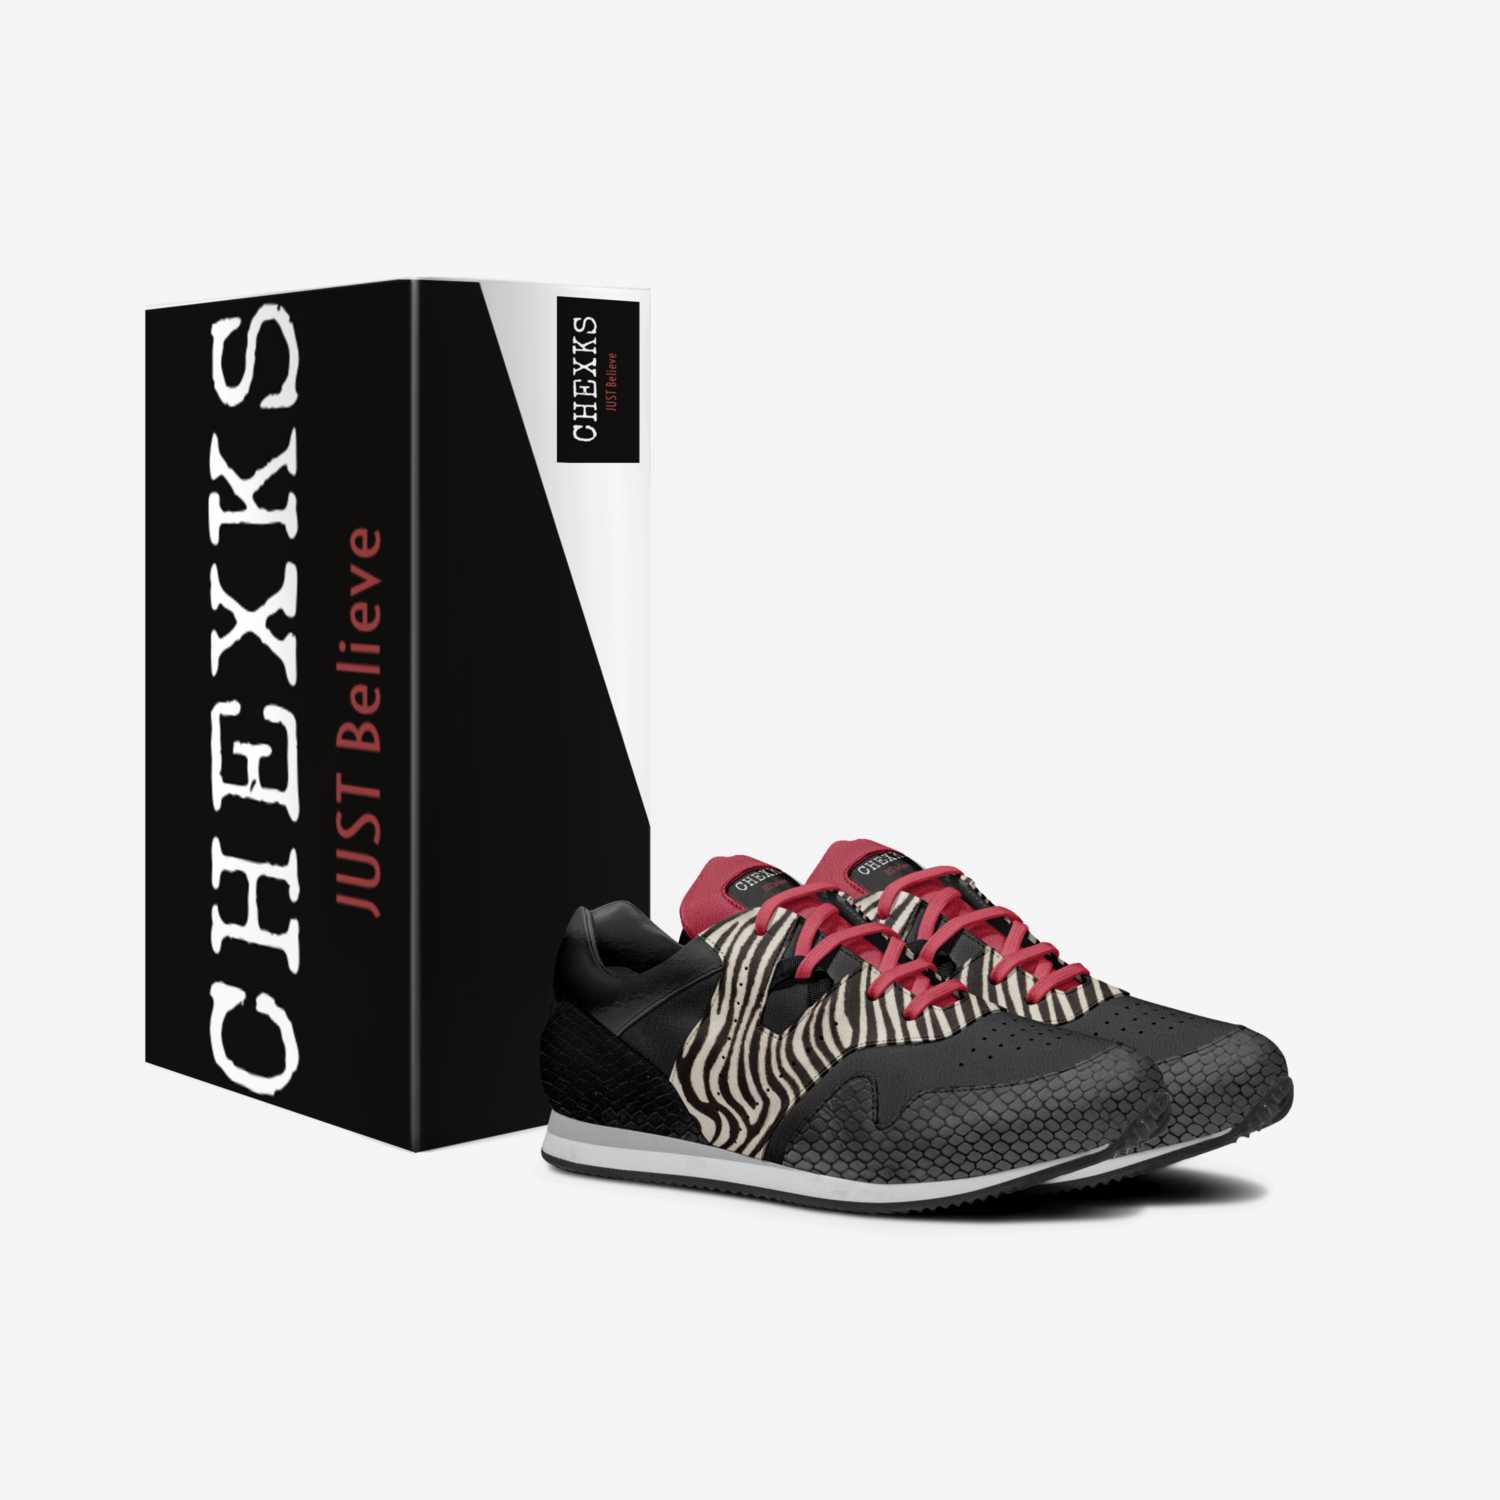 Chexks custom made in Italy shoes by Yarhonda Freeman | Box view